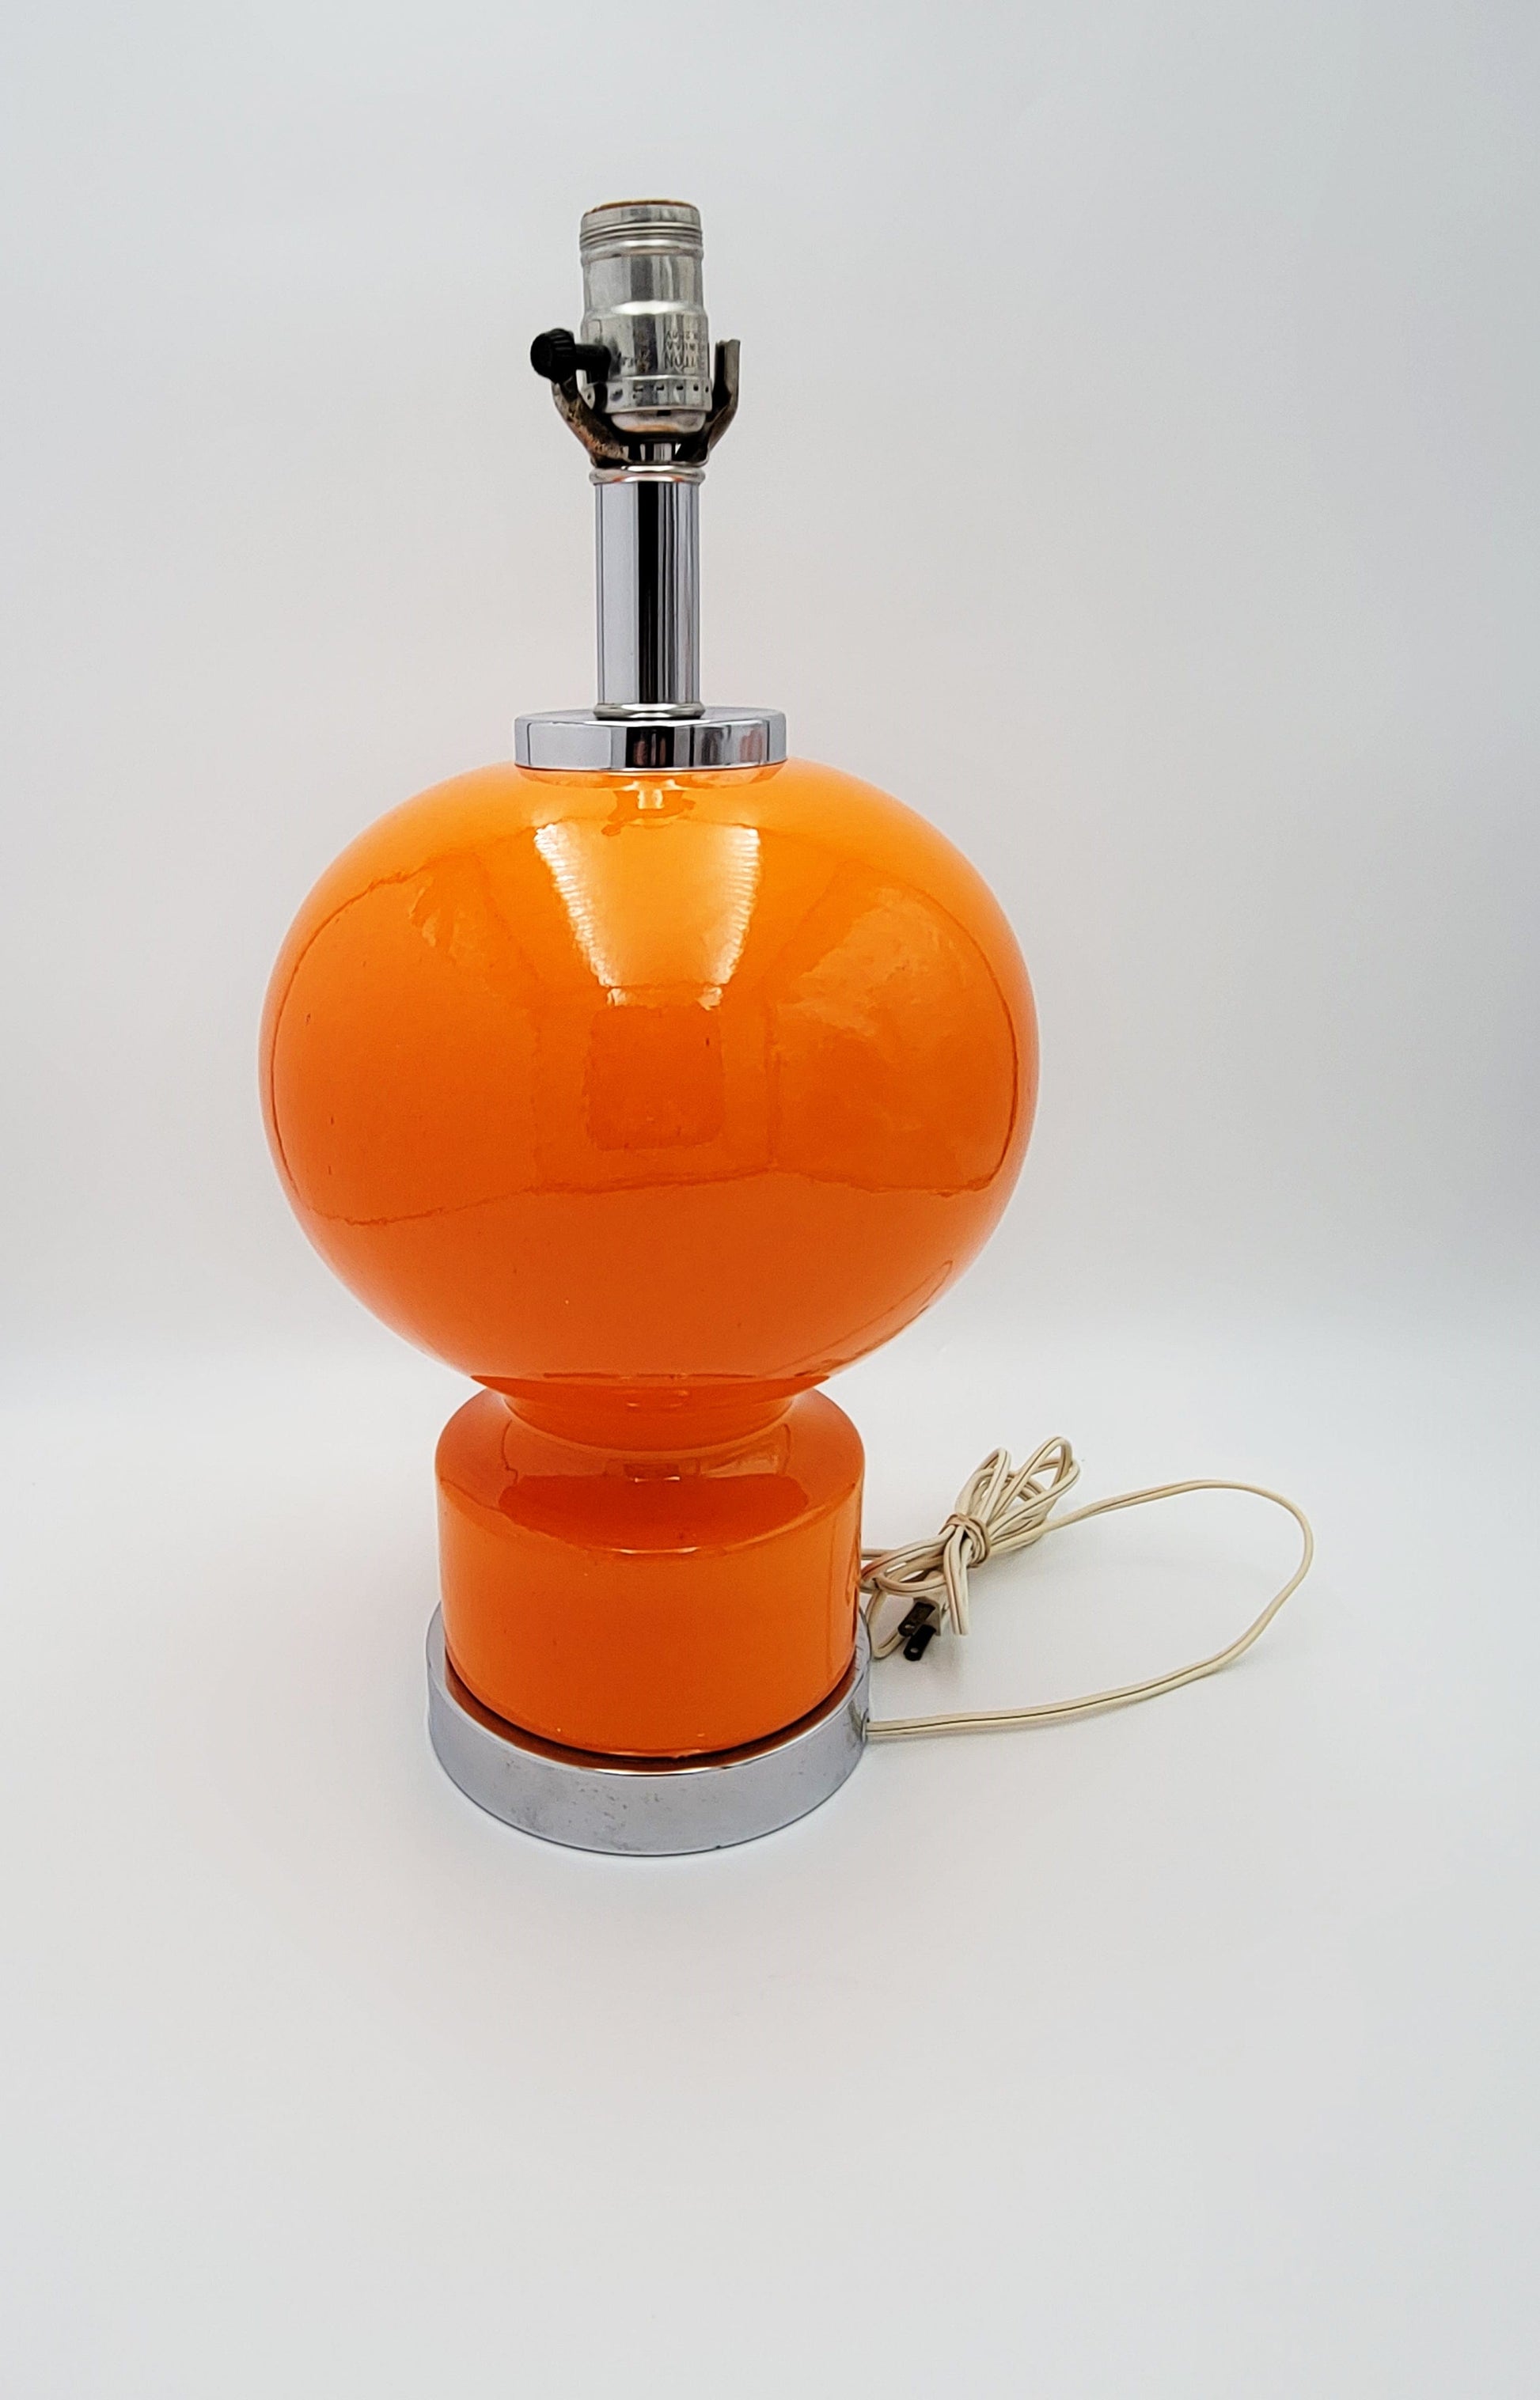 Kovacs Lighting Rare Retro Mod Kovacs Atomic Orange Ceramic & Chrome Table Lamp 1960s